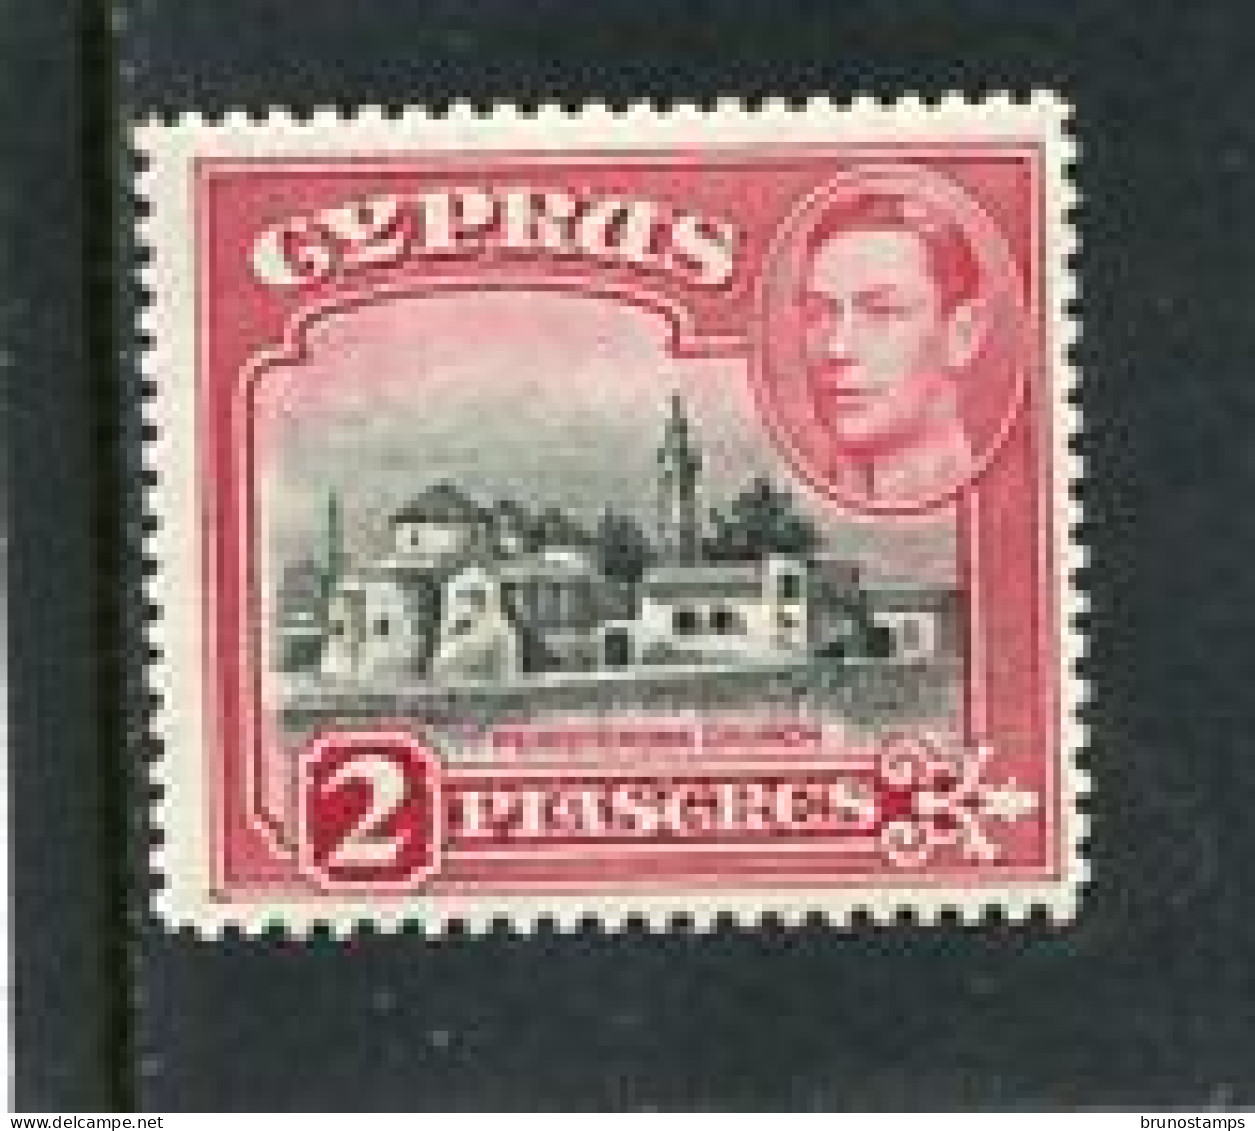 CYPRUS - 1938  GEORGE VI  2 Pi  MINT NH - Zypern (...-1960)